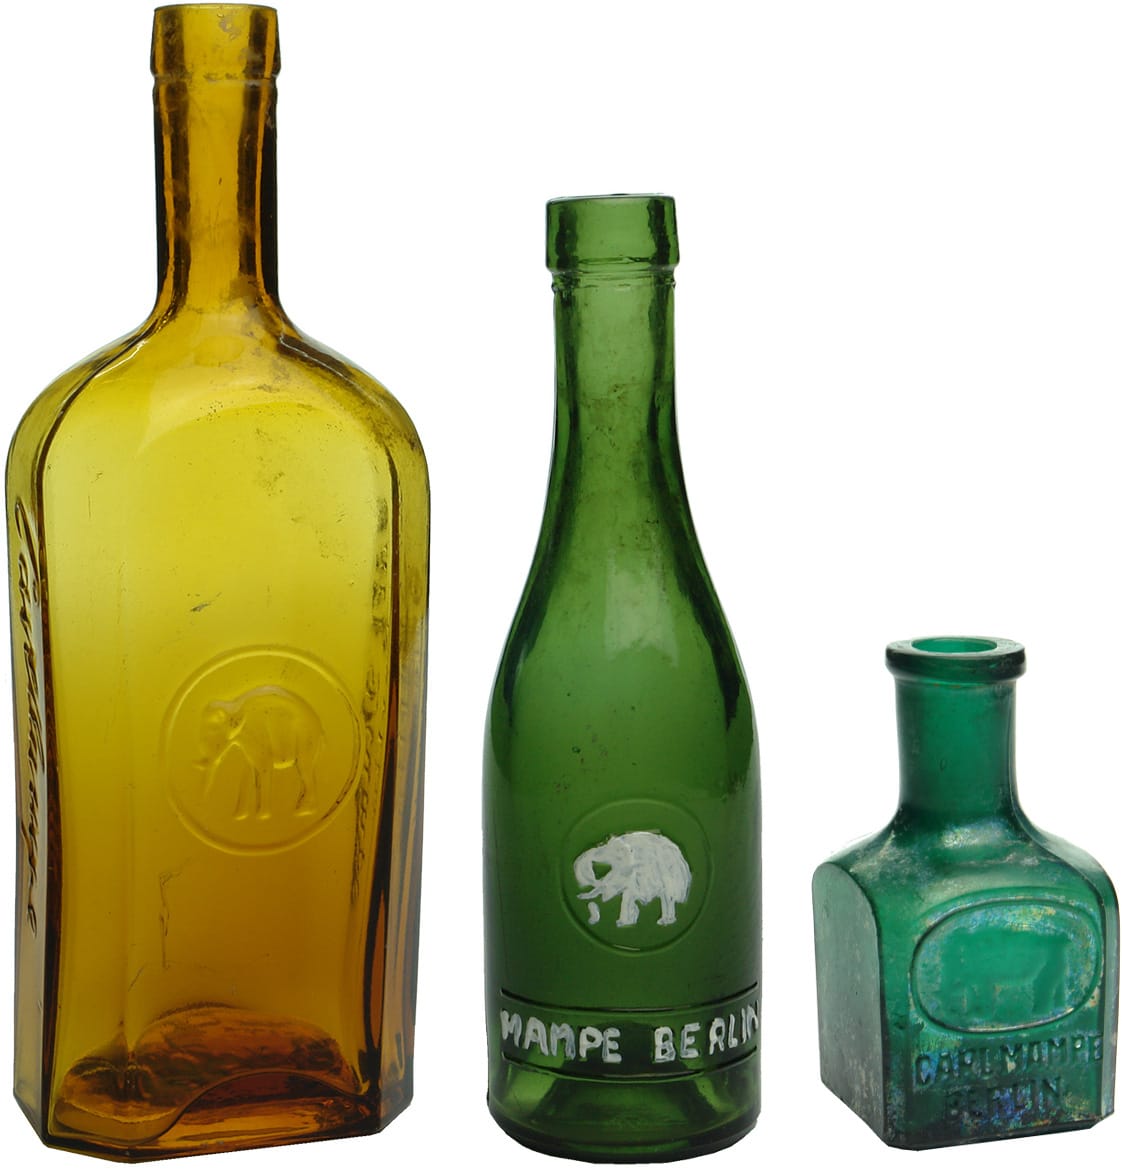 Carl Mampe Berlin Bitters Bottles